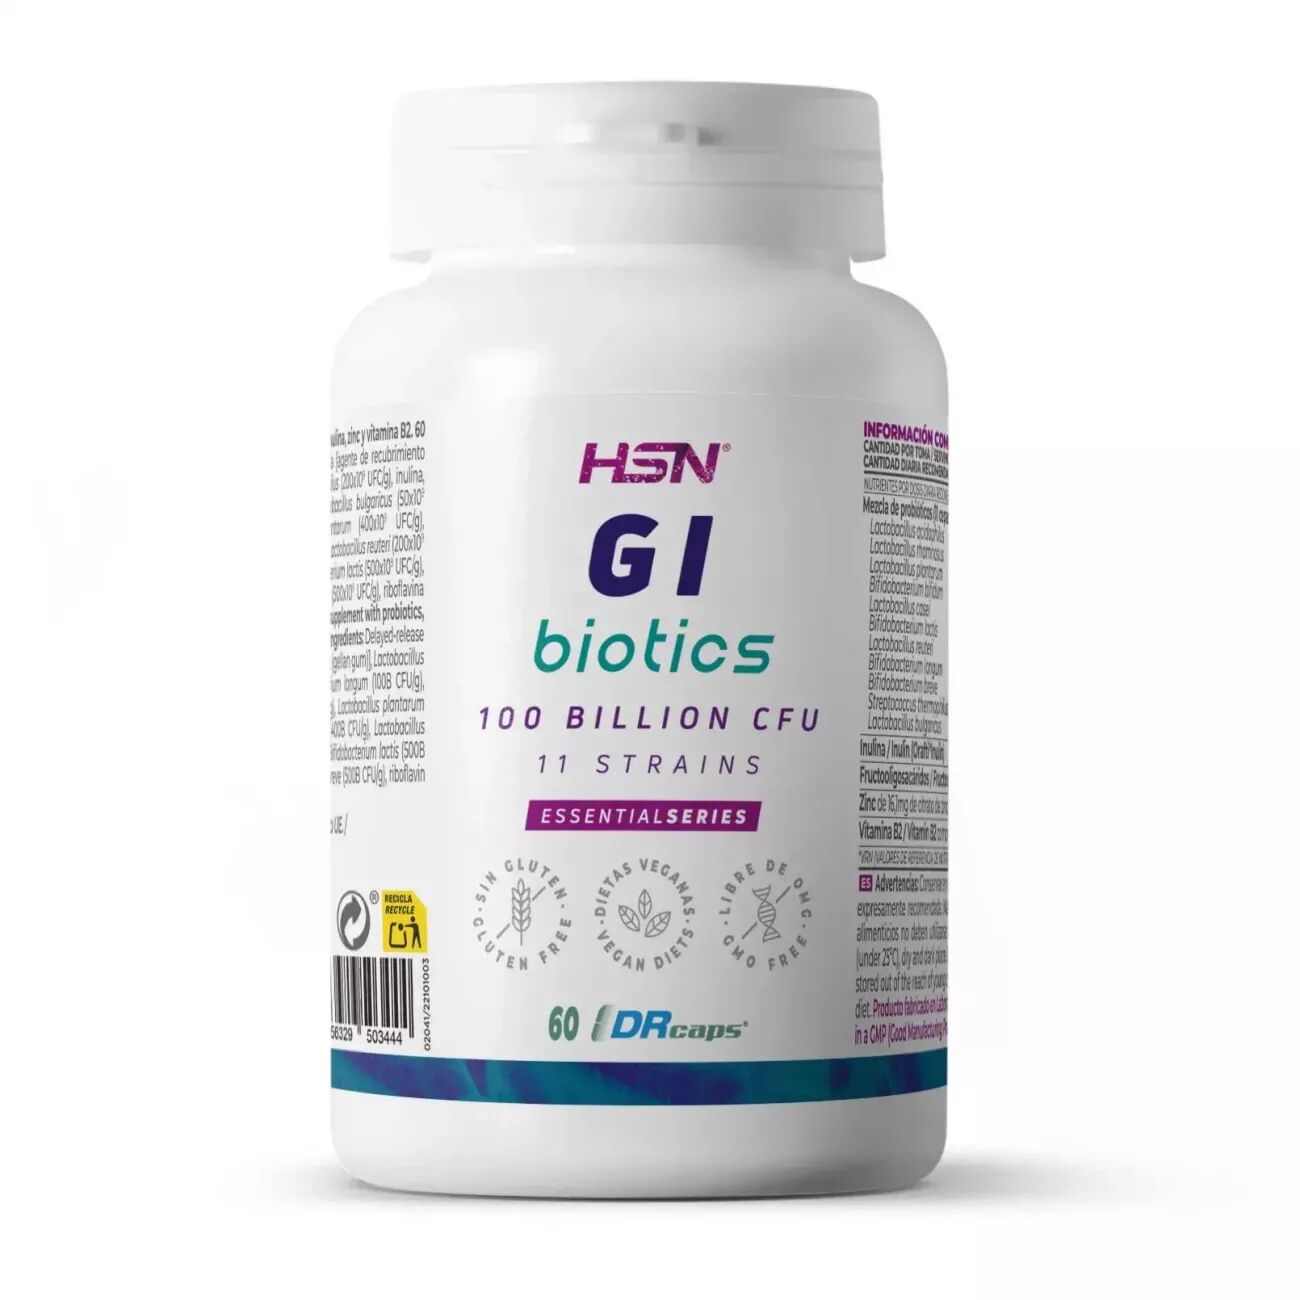 HSN Gi biotics (probióticos) 100b ufc 60 veg caps